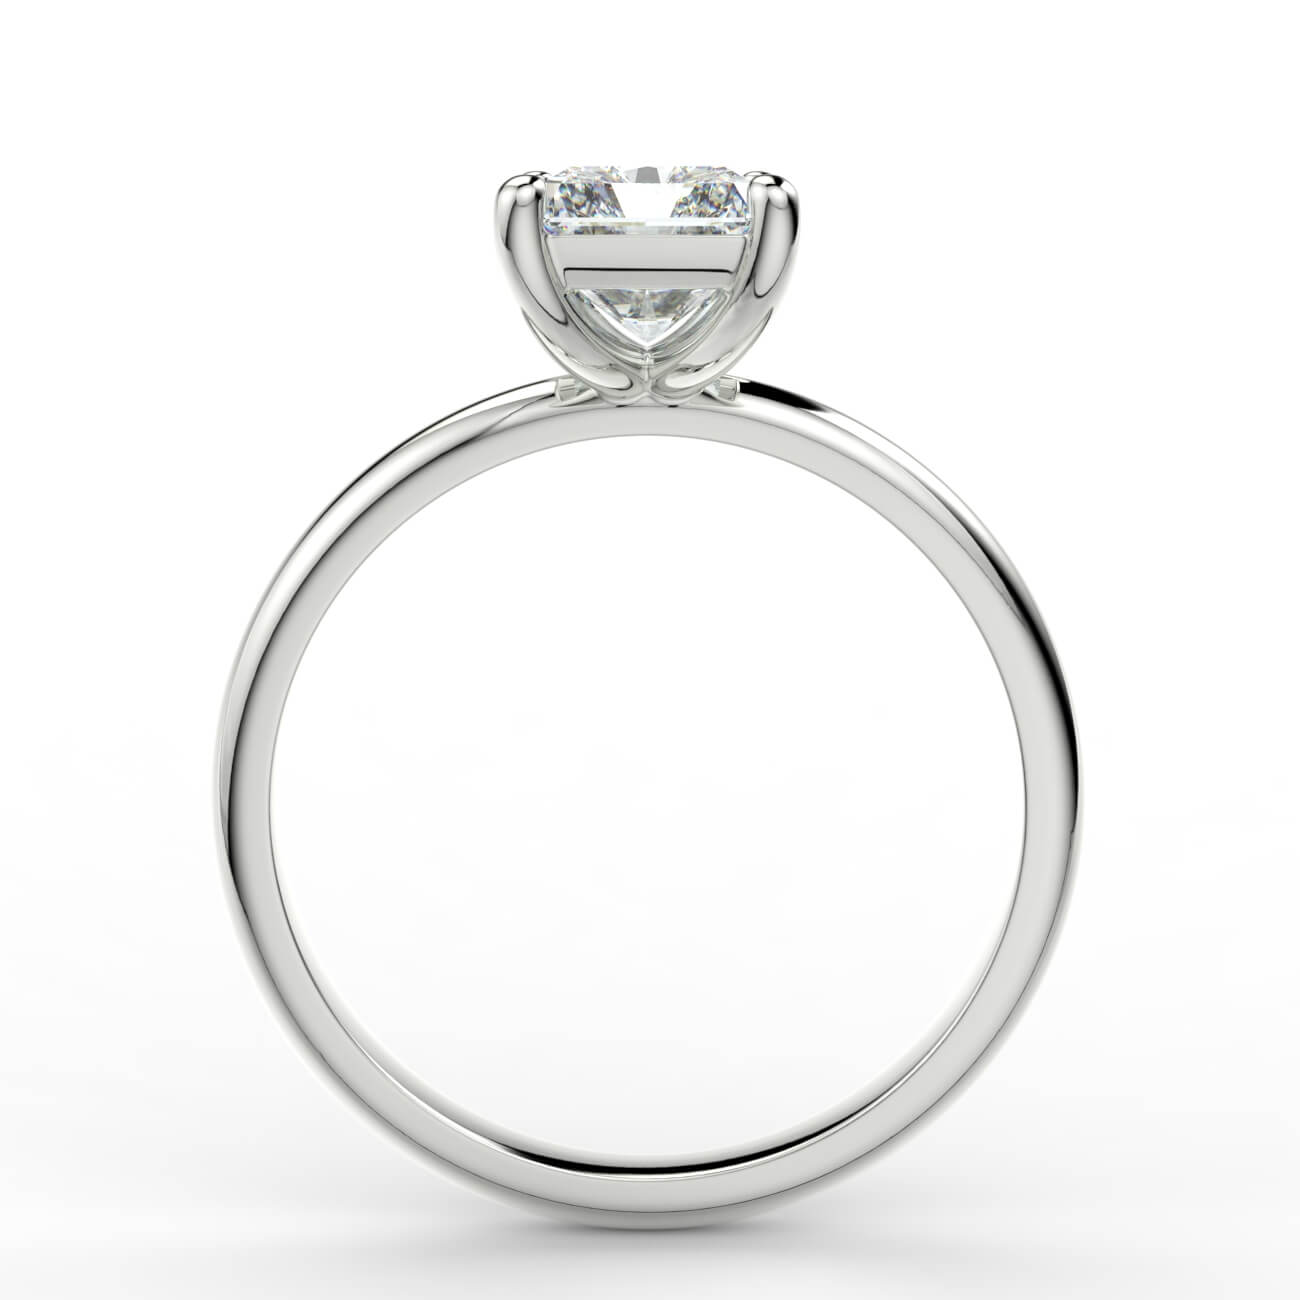 Solitaire radiant cut diamond engagement ring in white gold – Australian Diamond Network